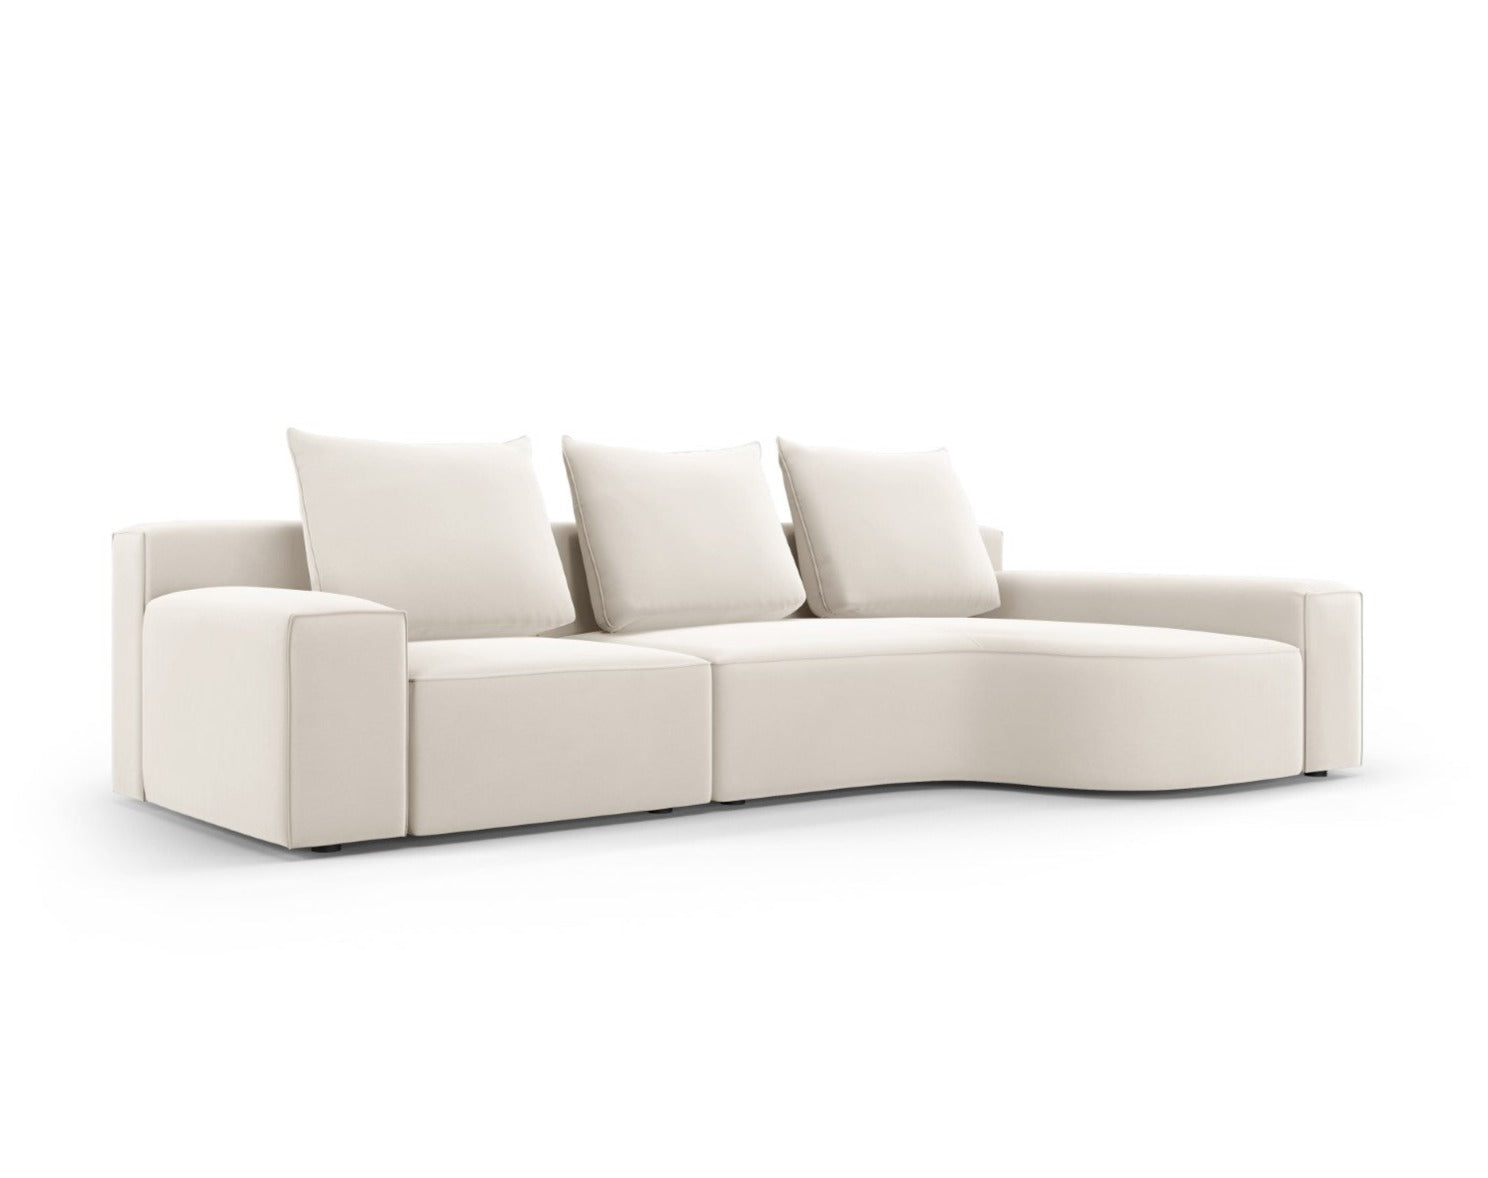 Velvet Right Corner Sofa, "Inca", 4 Seats, 280x137x89
Made in Europe, Micadoni, Eye on Design